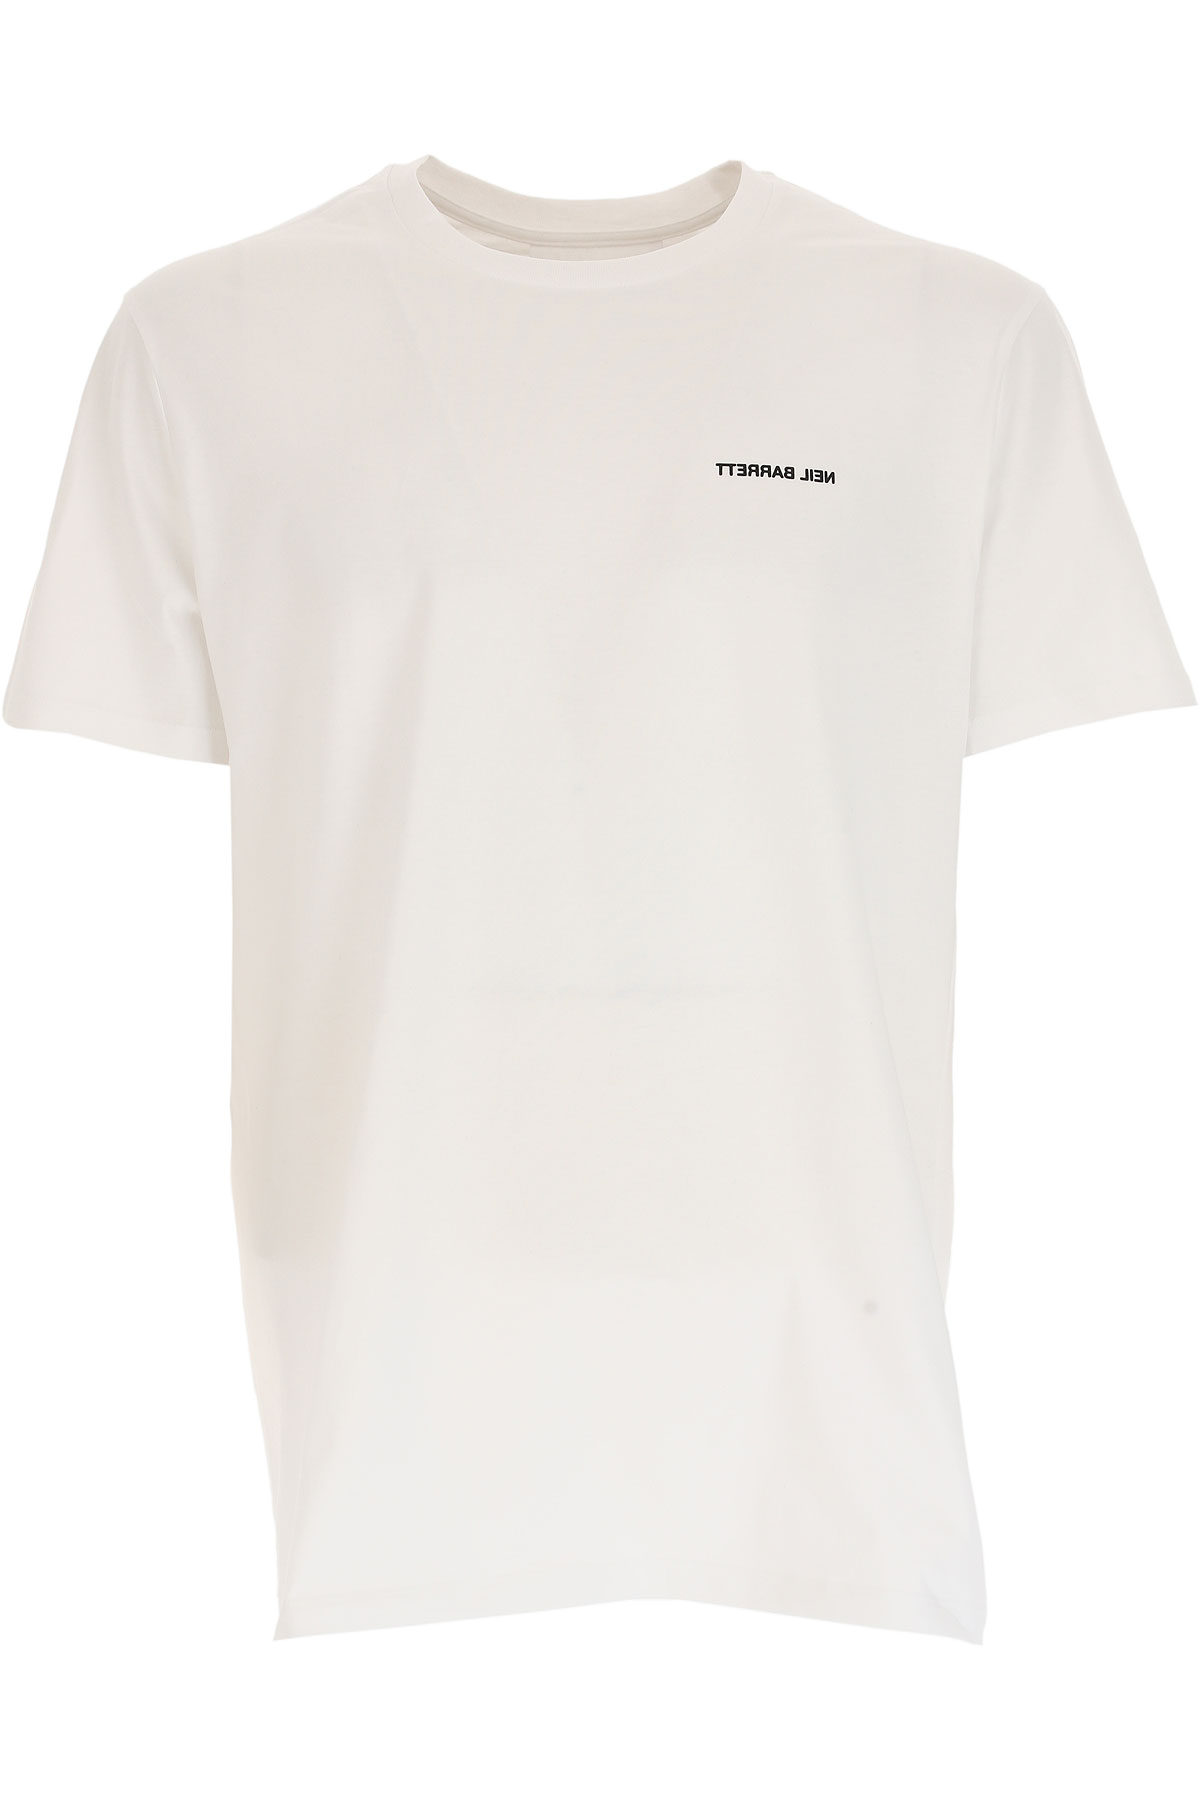 Neil Barrett T-shirt Homme, Blanc, Coton, 2017, L M S XL XS